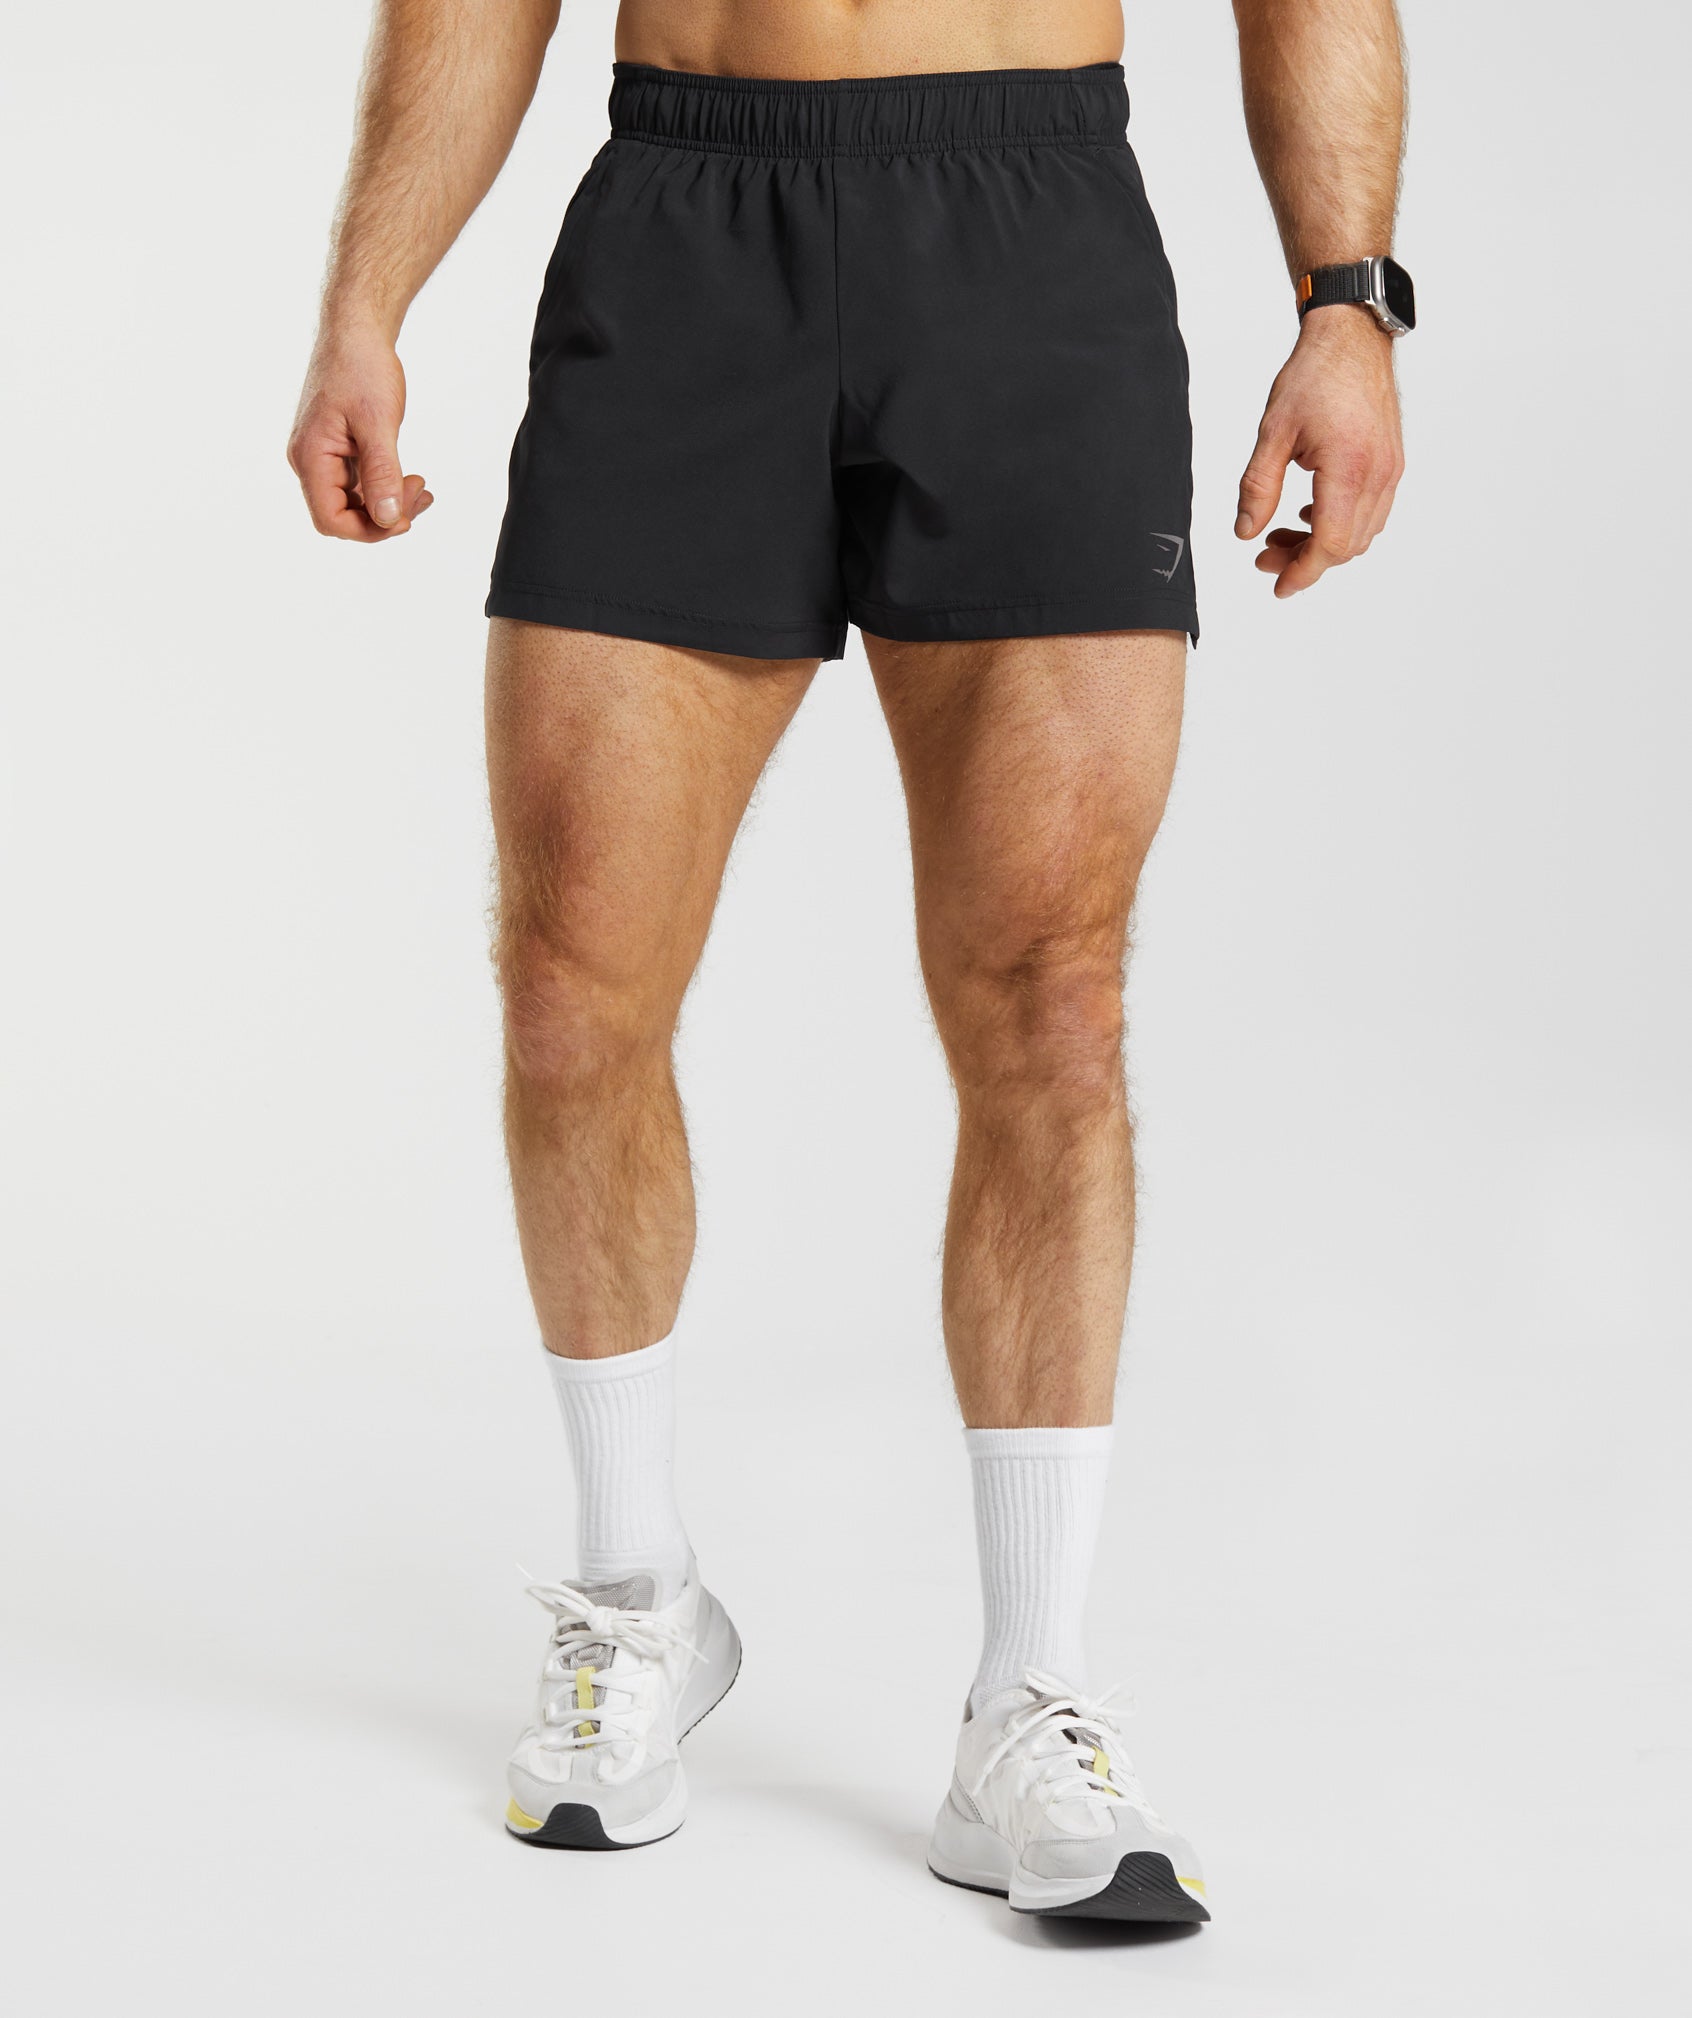 fvwitlyh Gymshark Shorts Men's Inseam Elastic-Waist Short Shorts